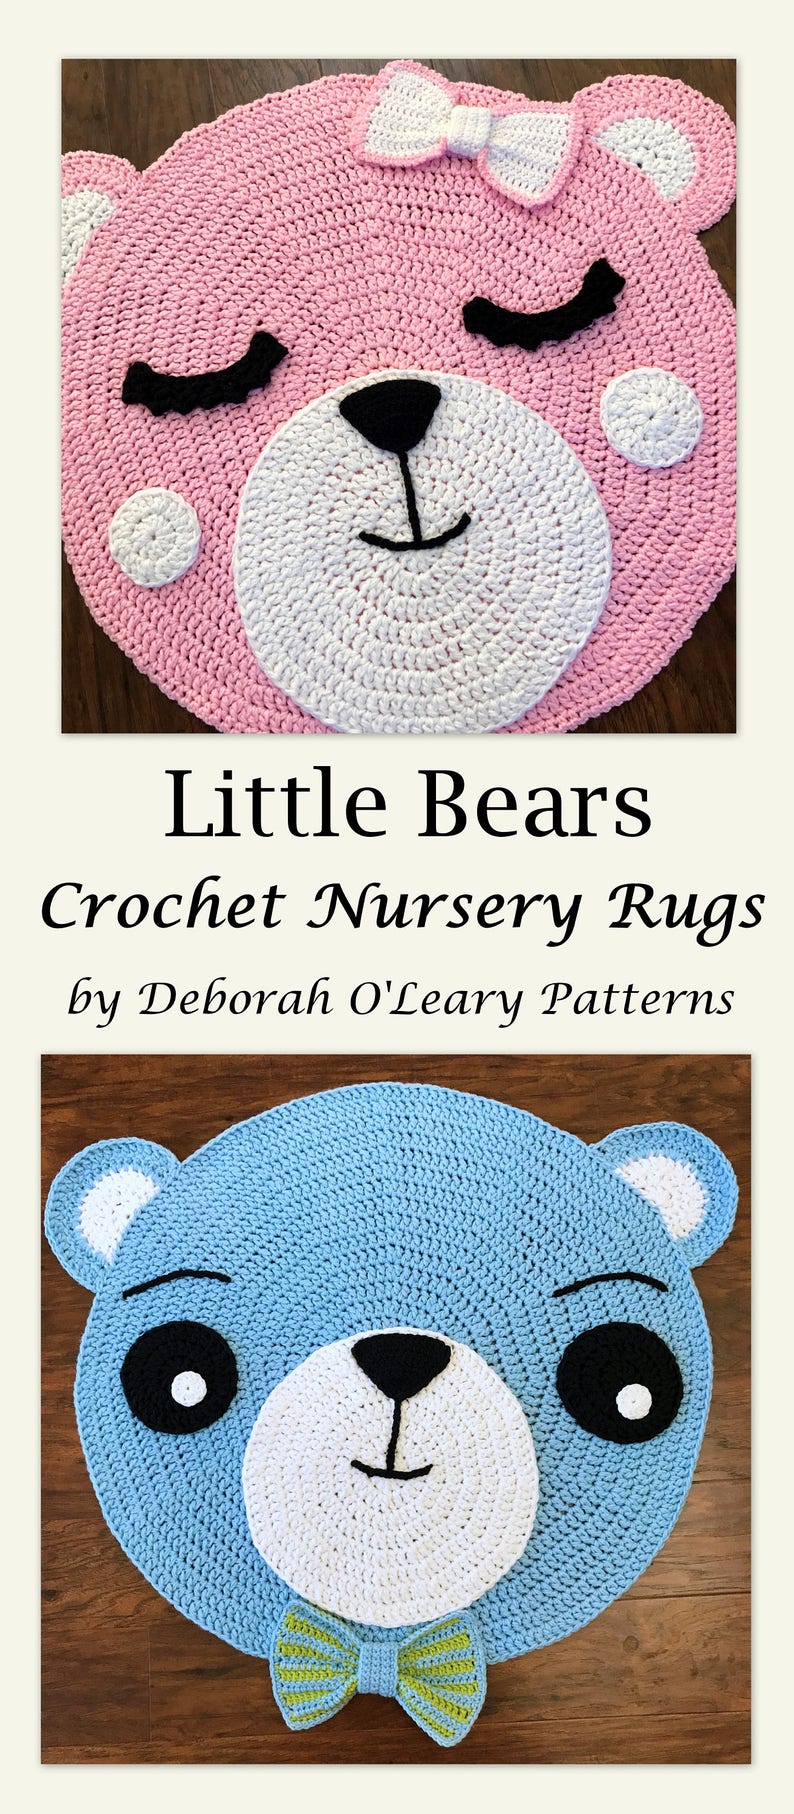 Crochet Rug PATTERN Crochet Bear Rug Nursery Rug Pattern Little Bears Nursery Rugs by Deborah O'Leary Patterns English Only image 2